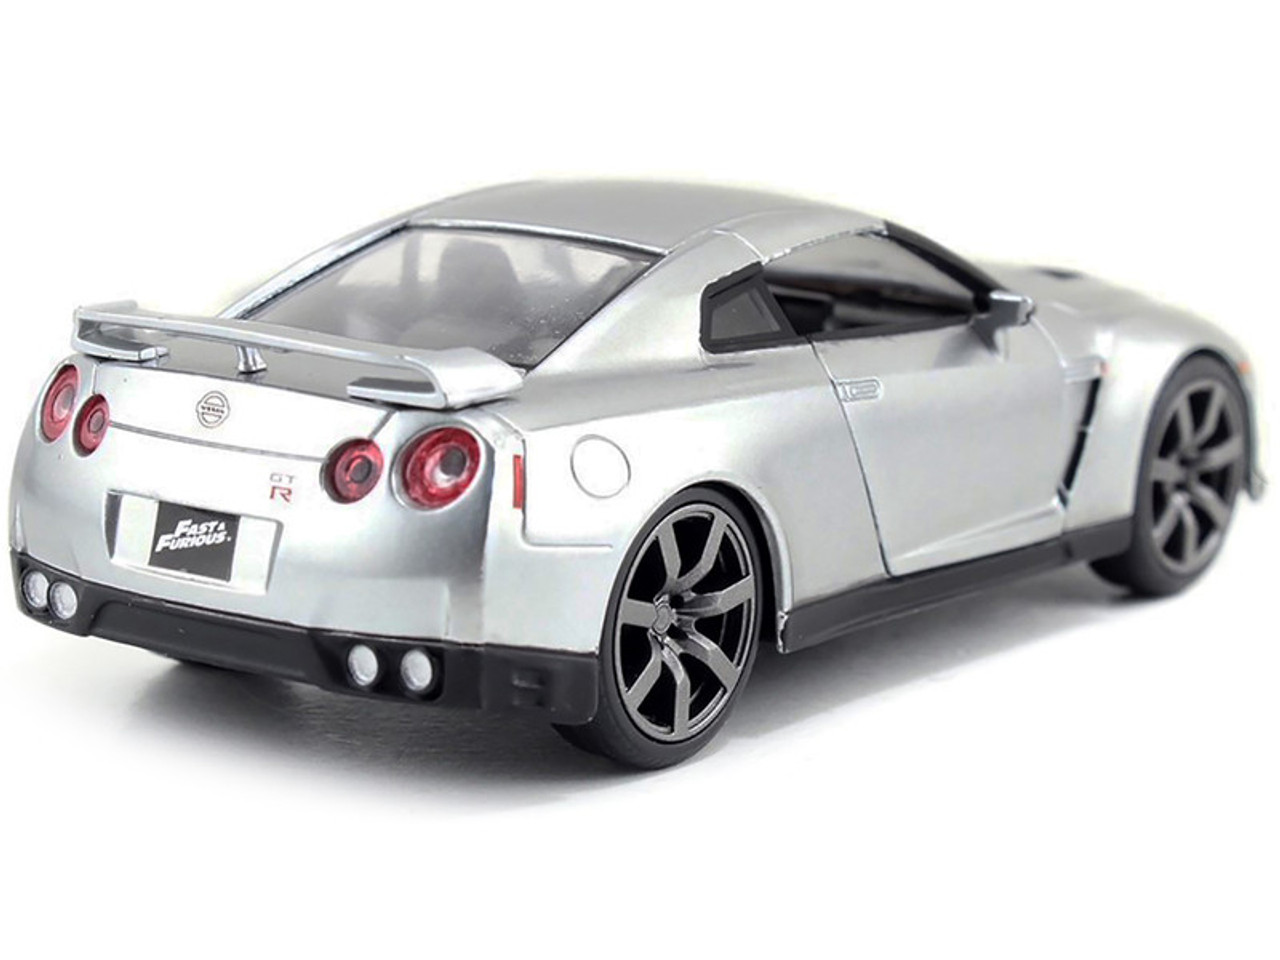 Brian's Nissan GT-R (R35) Silver Metallic "Fast & Furious" Movie 1/32 Diecast Model Car by Jada